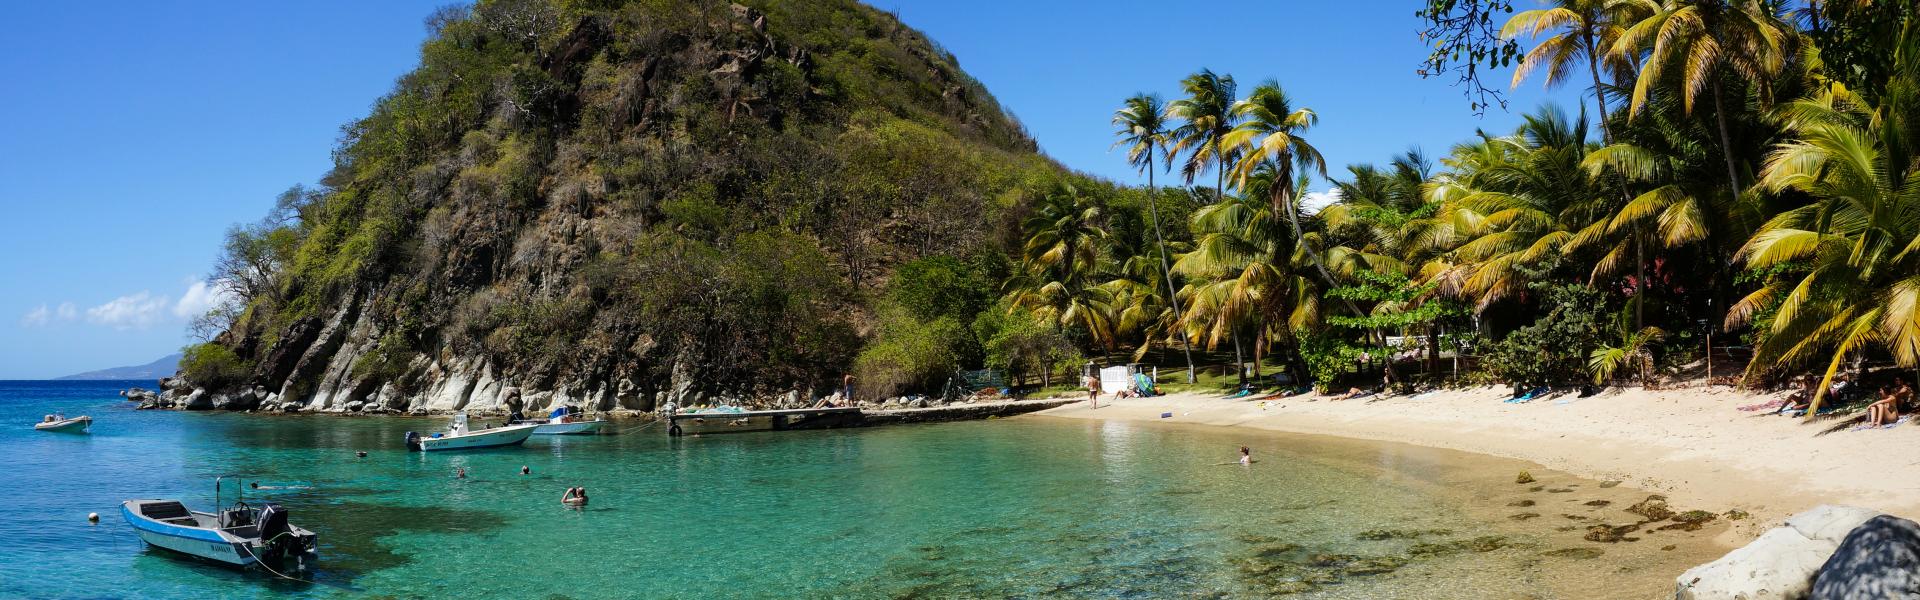 Locations de vacances, villas et gîtes en Guadeloupe - HomeToGo